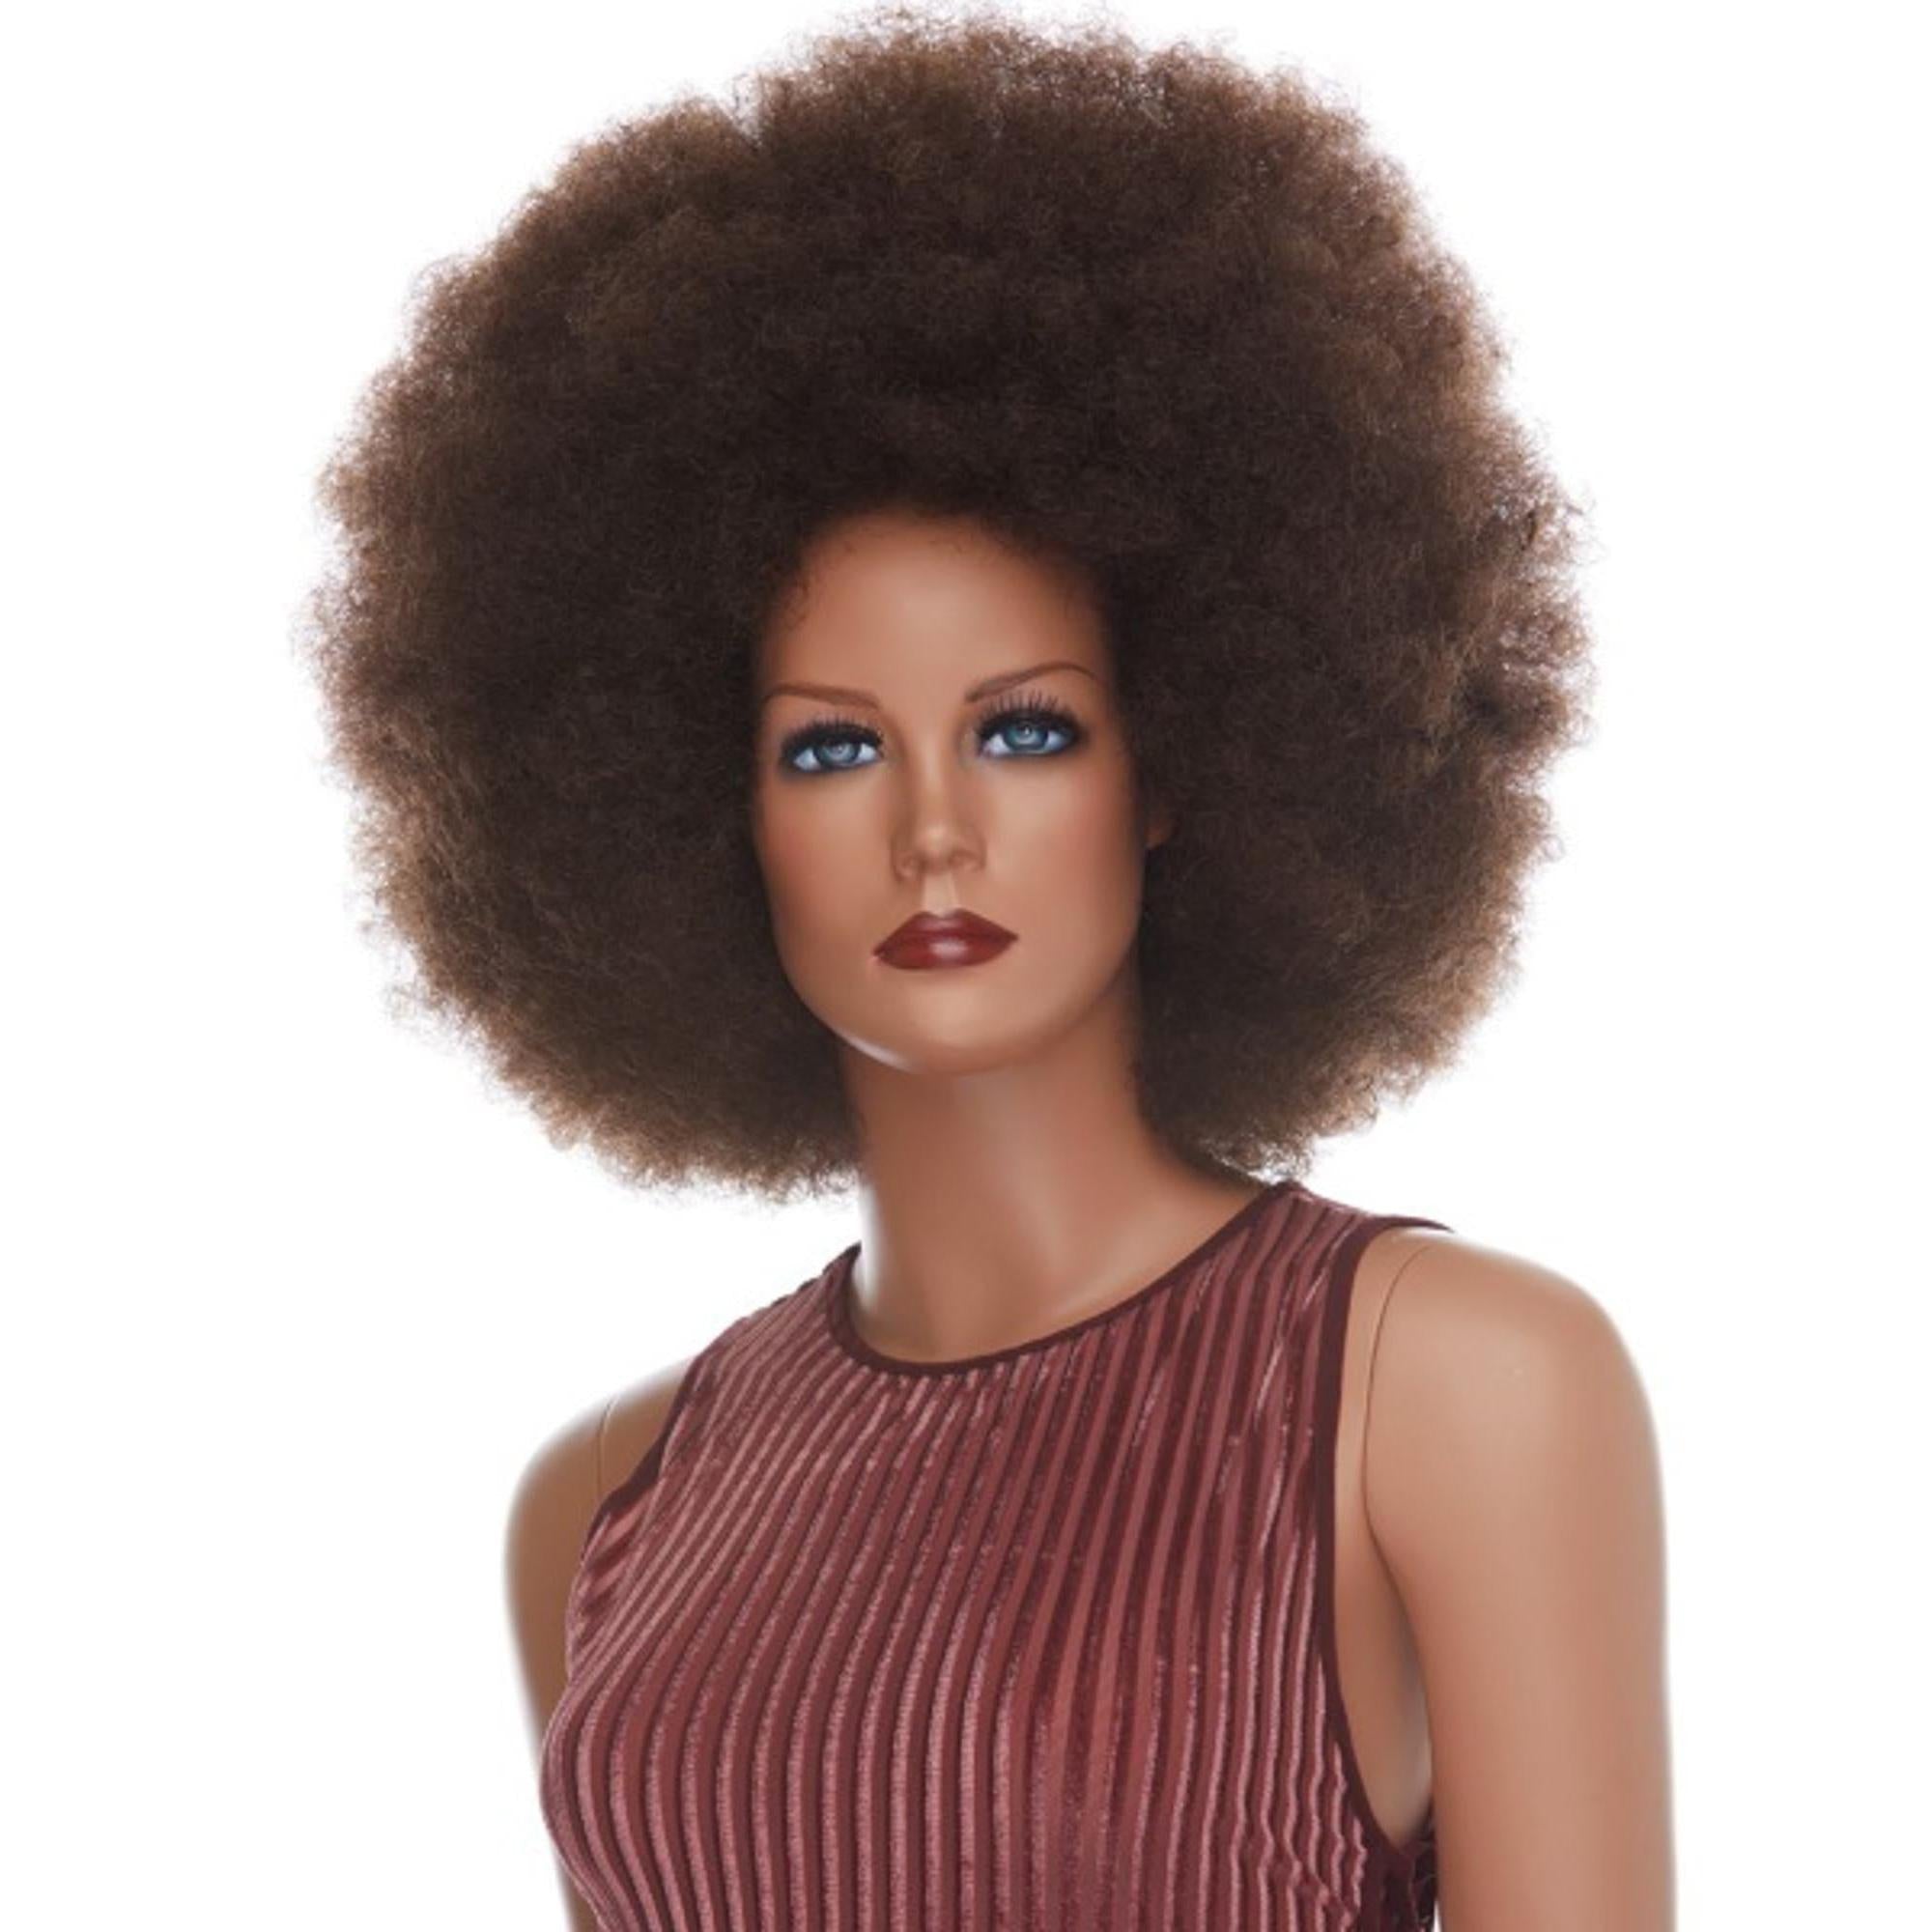 Perruque afro couleur marron - Perruque funky